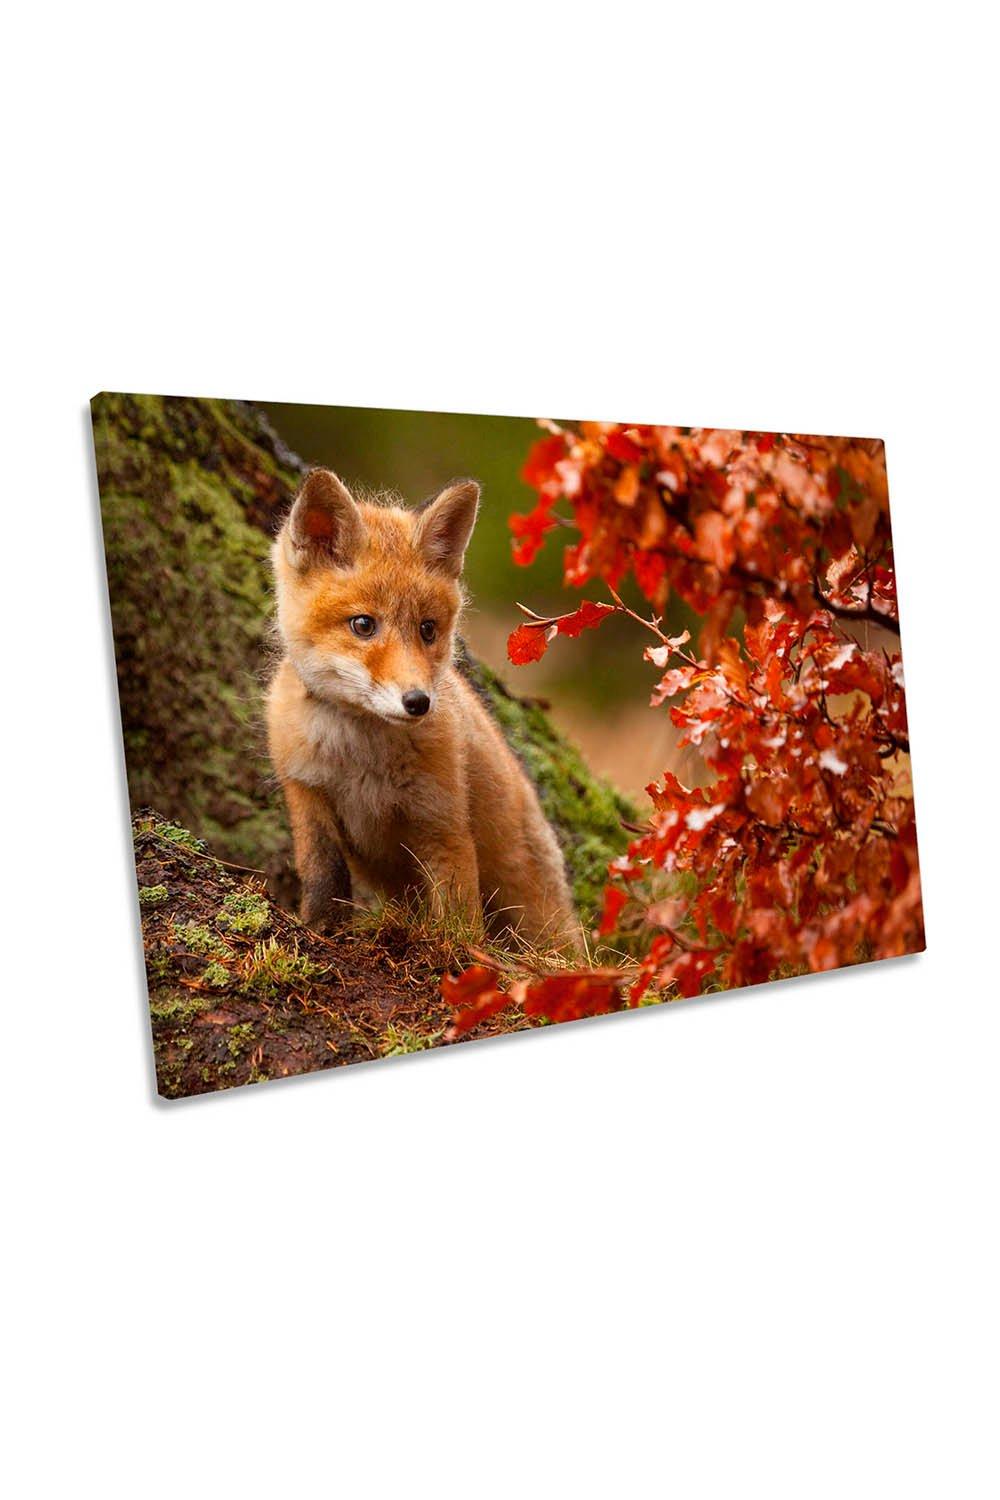 Baby Fox Autumn Wildlife Canvas Wall Art Picture Print